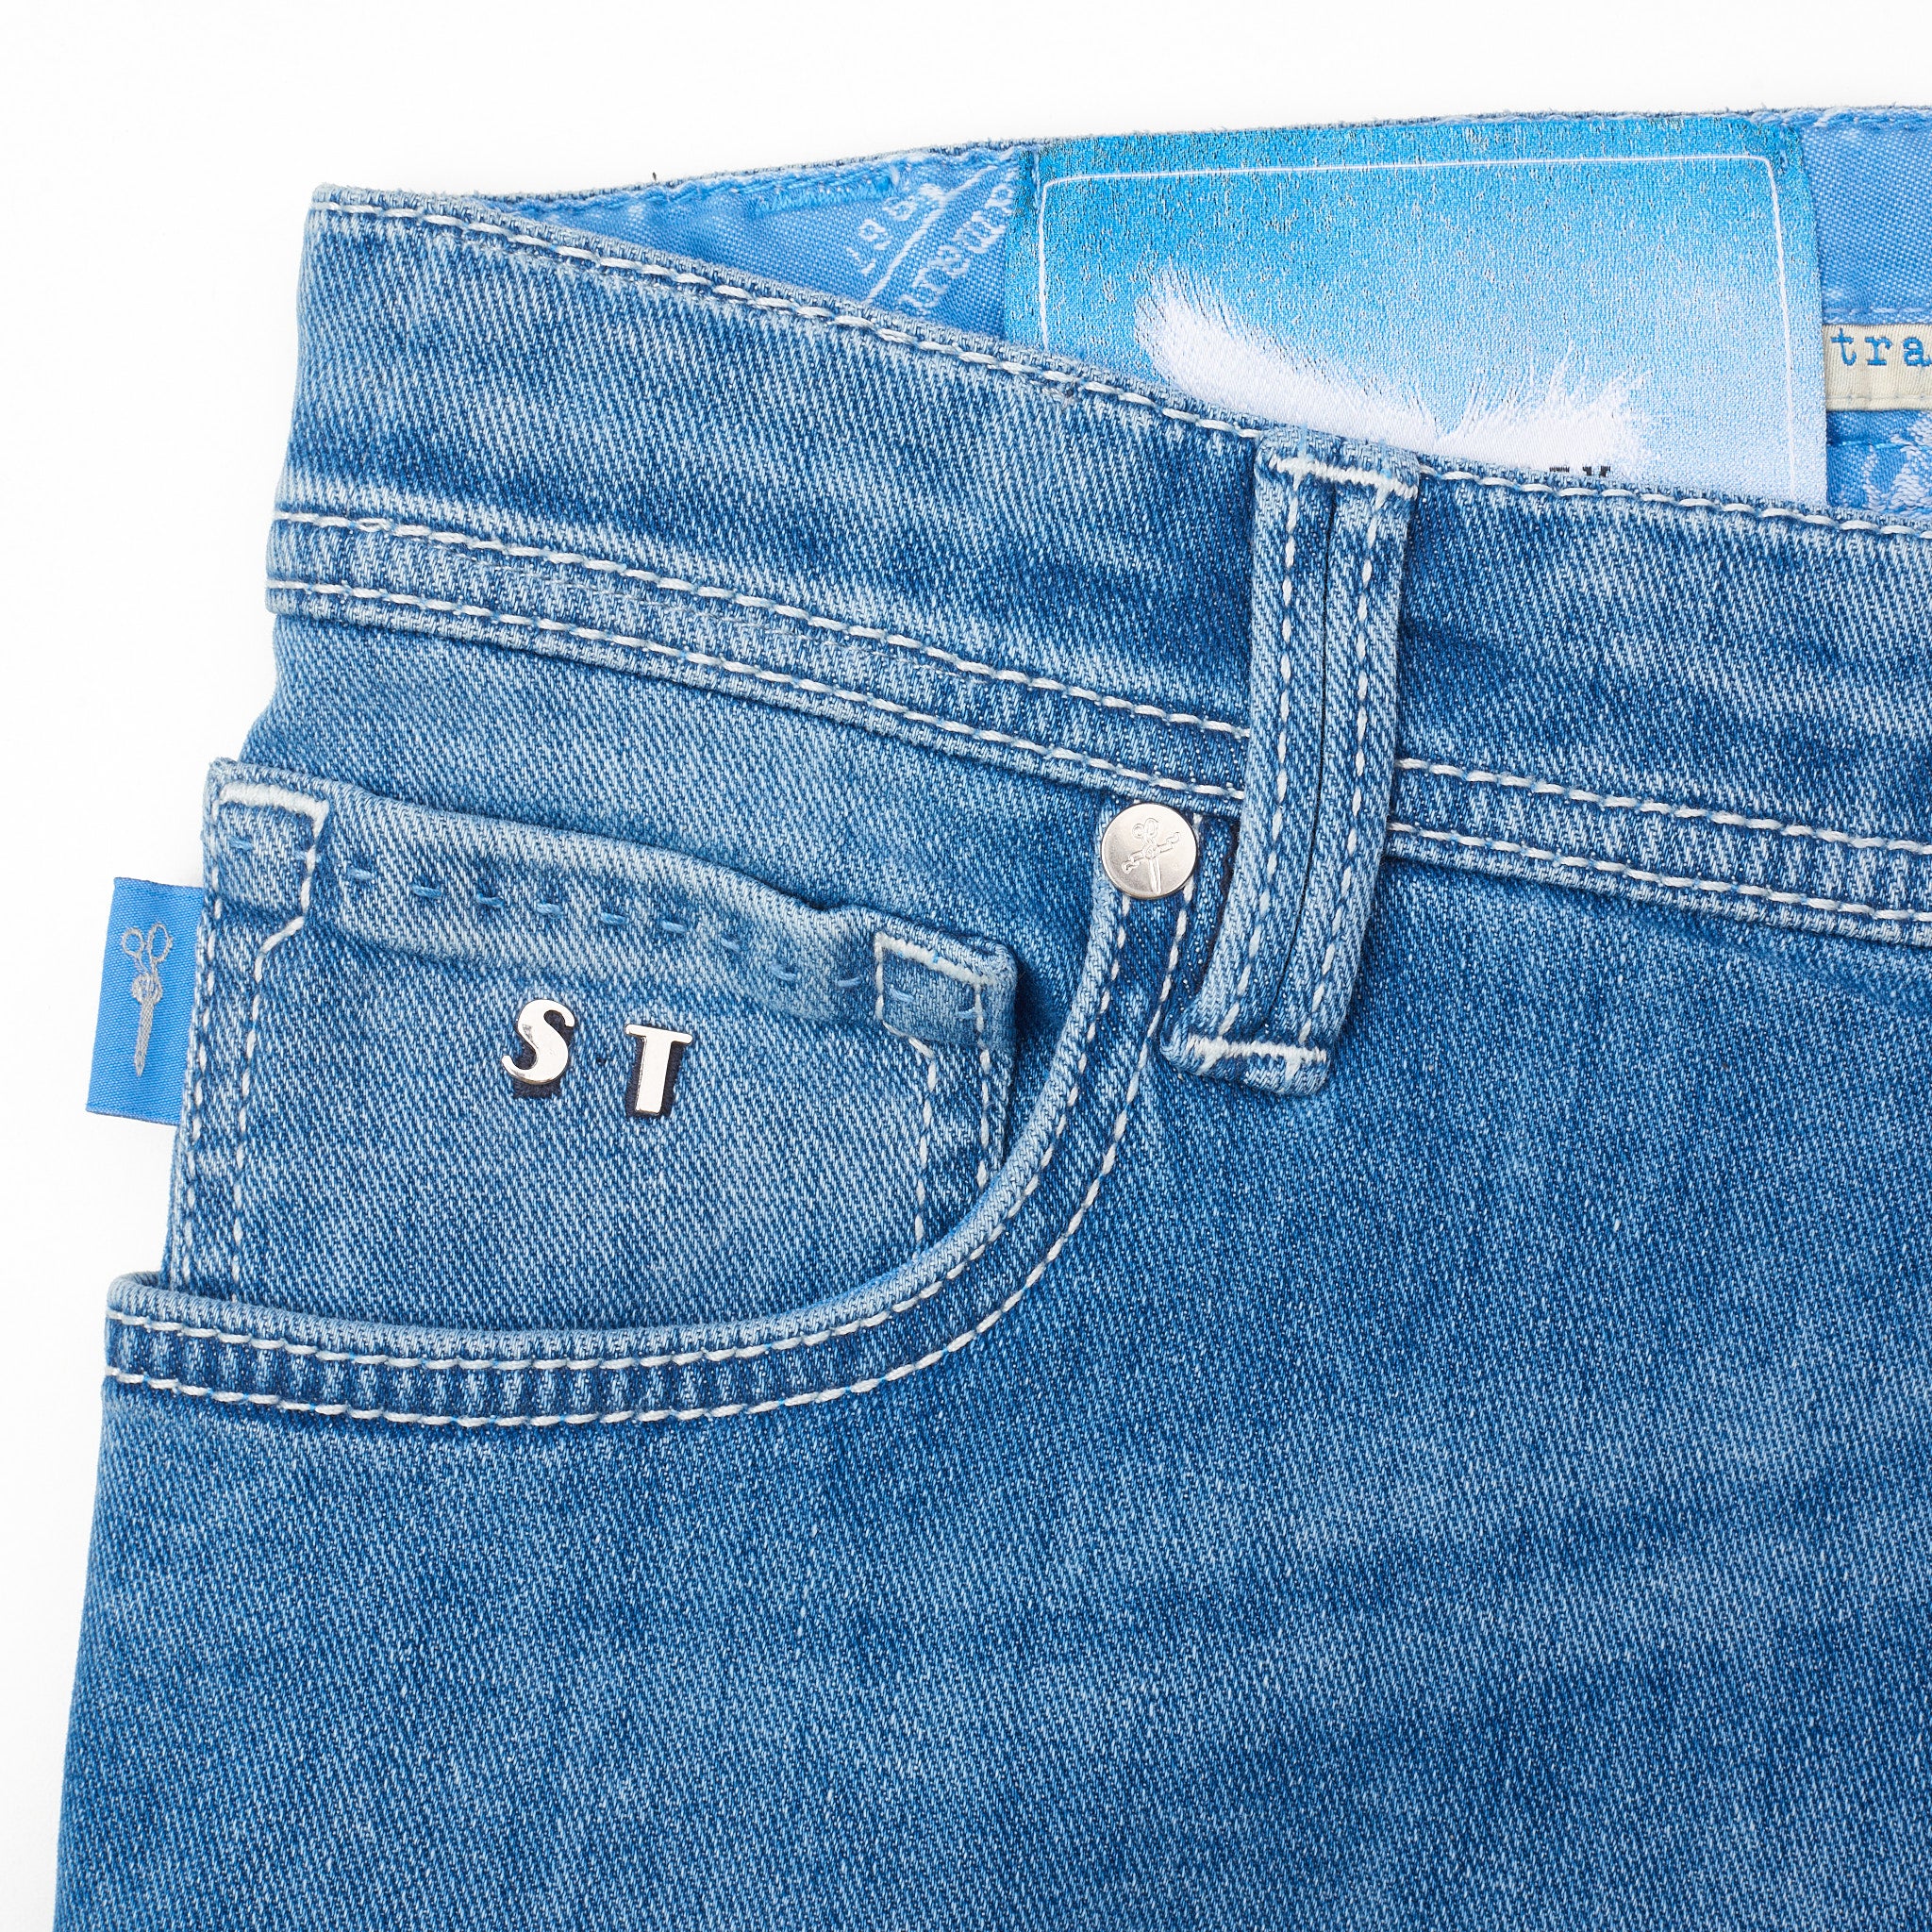 TRAMAROSSA Lightdenim Leonardo 2 Years Blue Cotton Stretch Slim Fit Jeans NEW 33 TRAMAROSSA